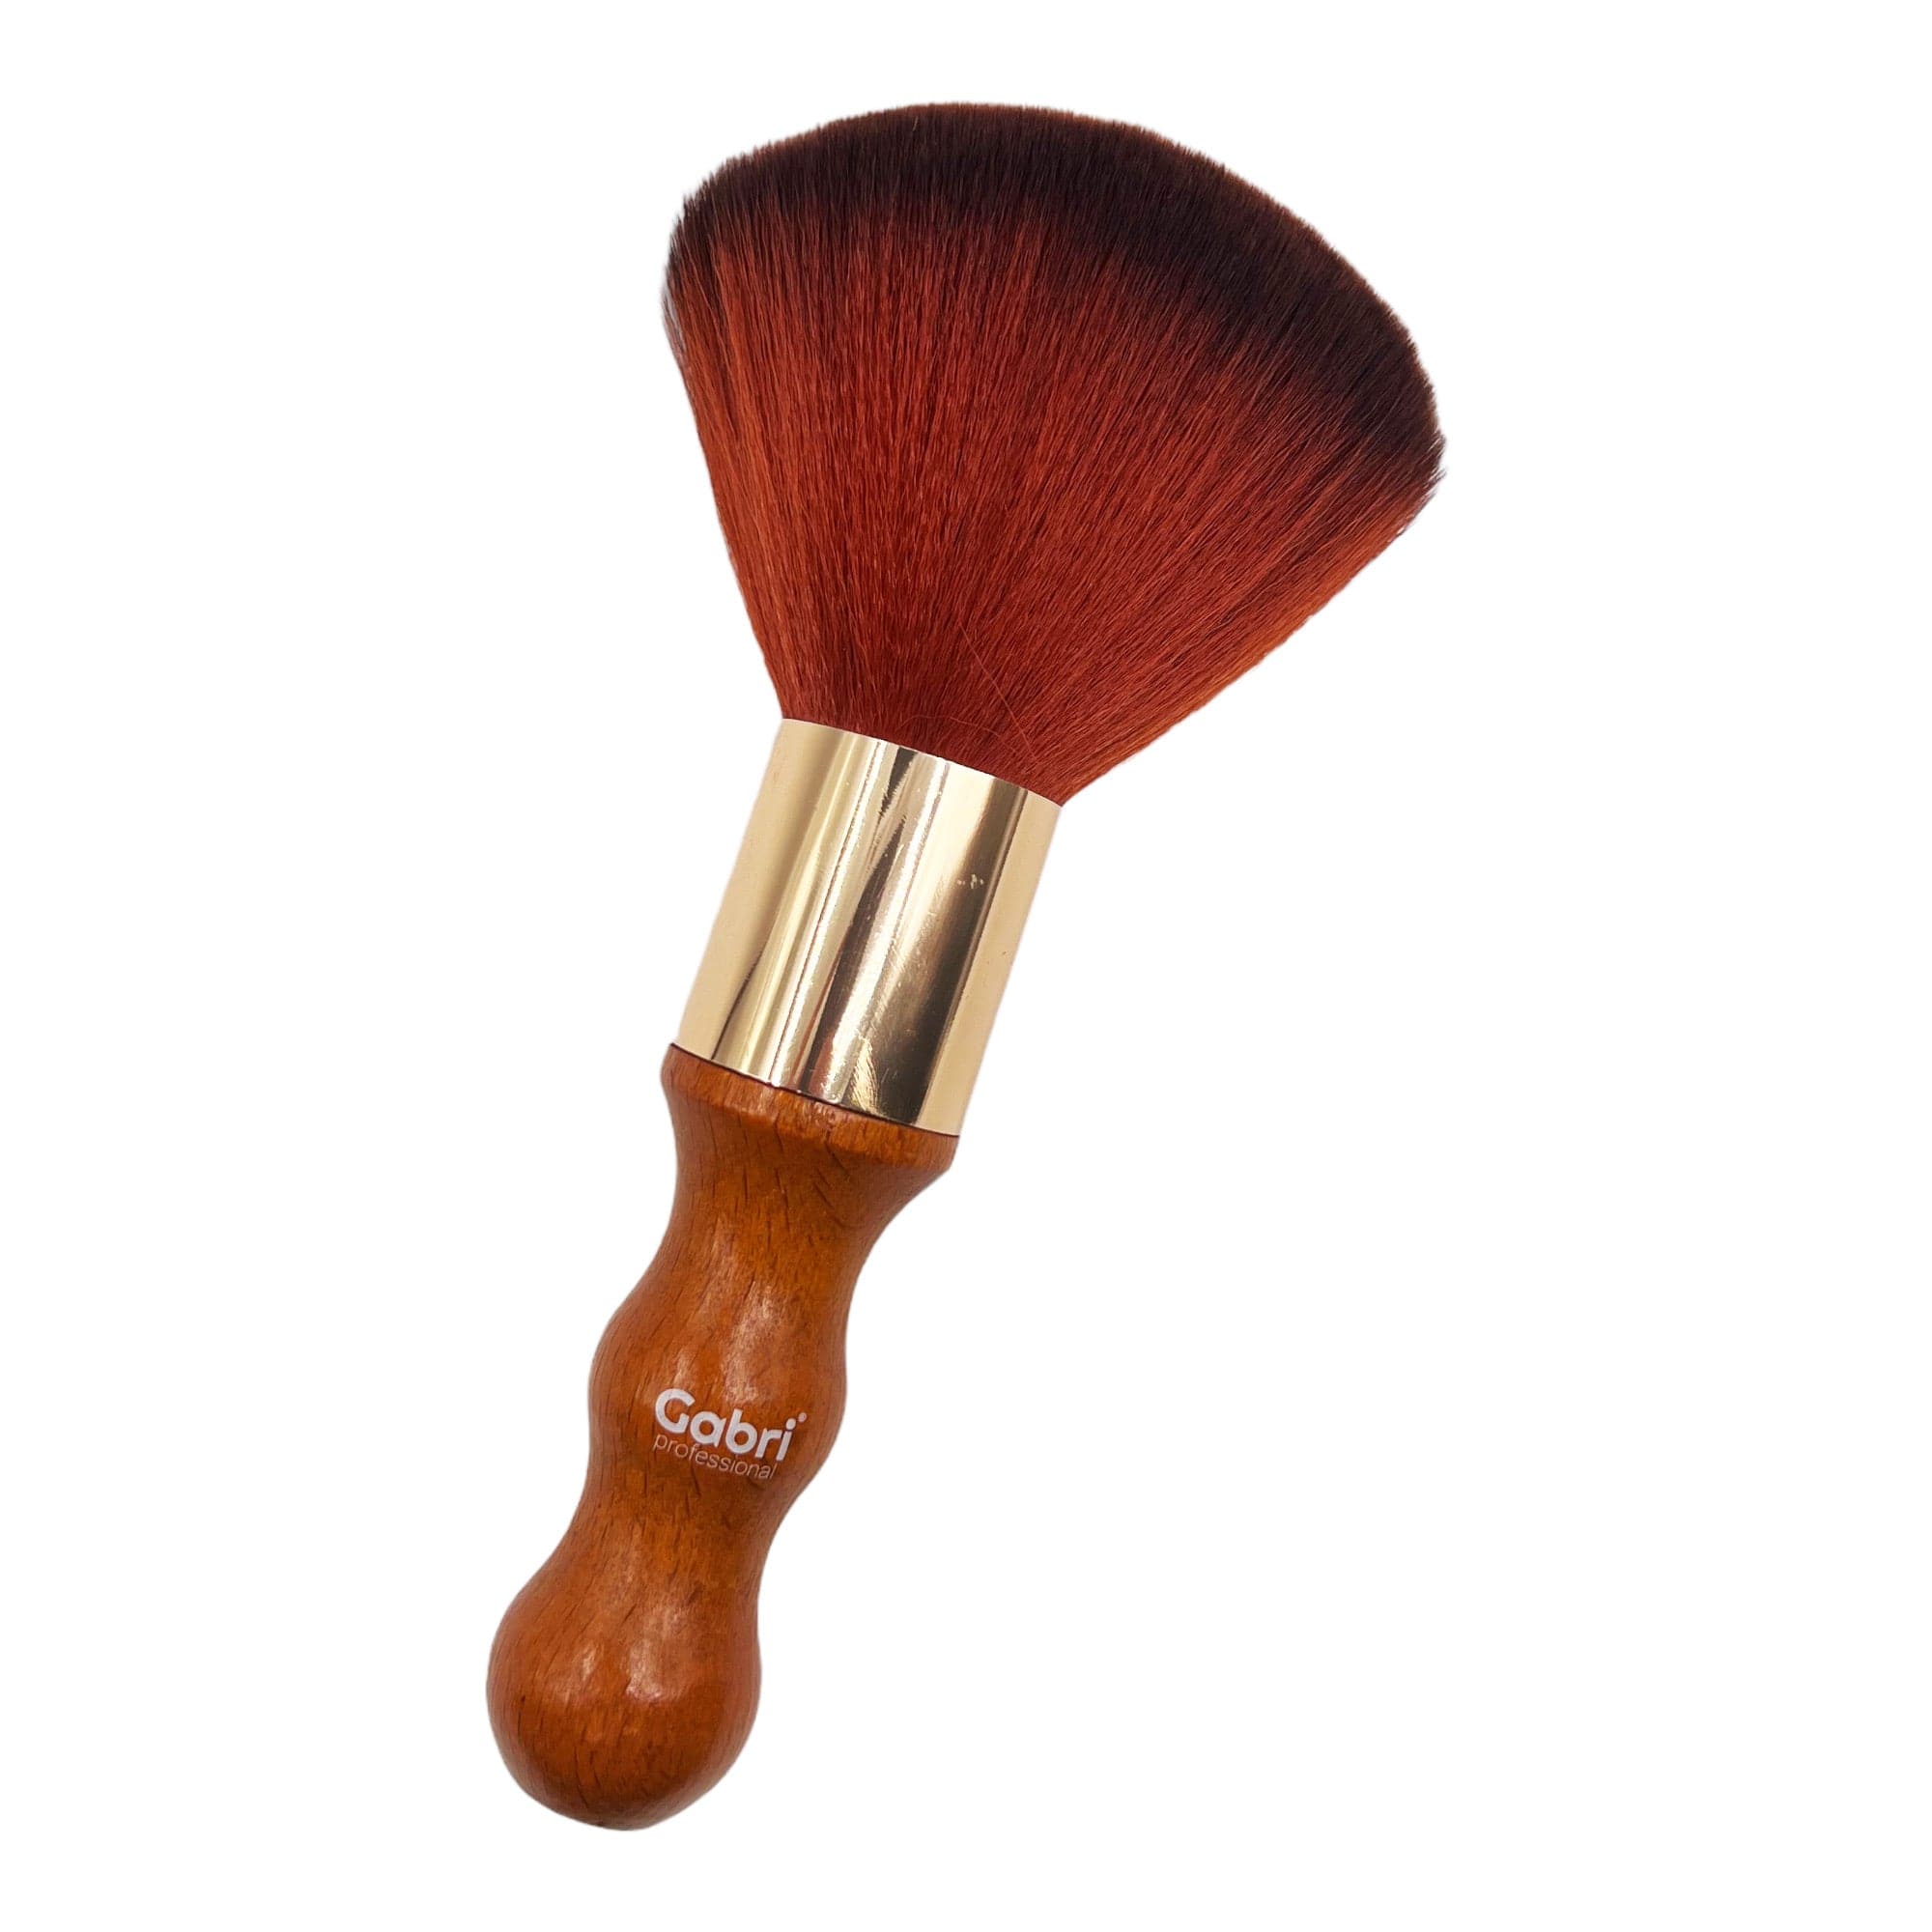 Gabri - Barber Neck Brush Extra Long Lux Wood Handle Red Bristle 19cm